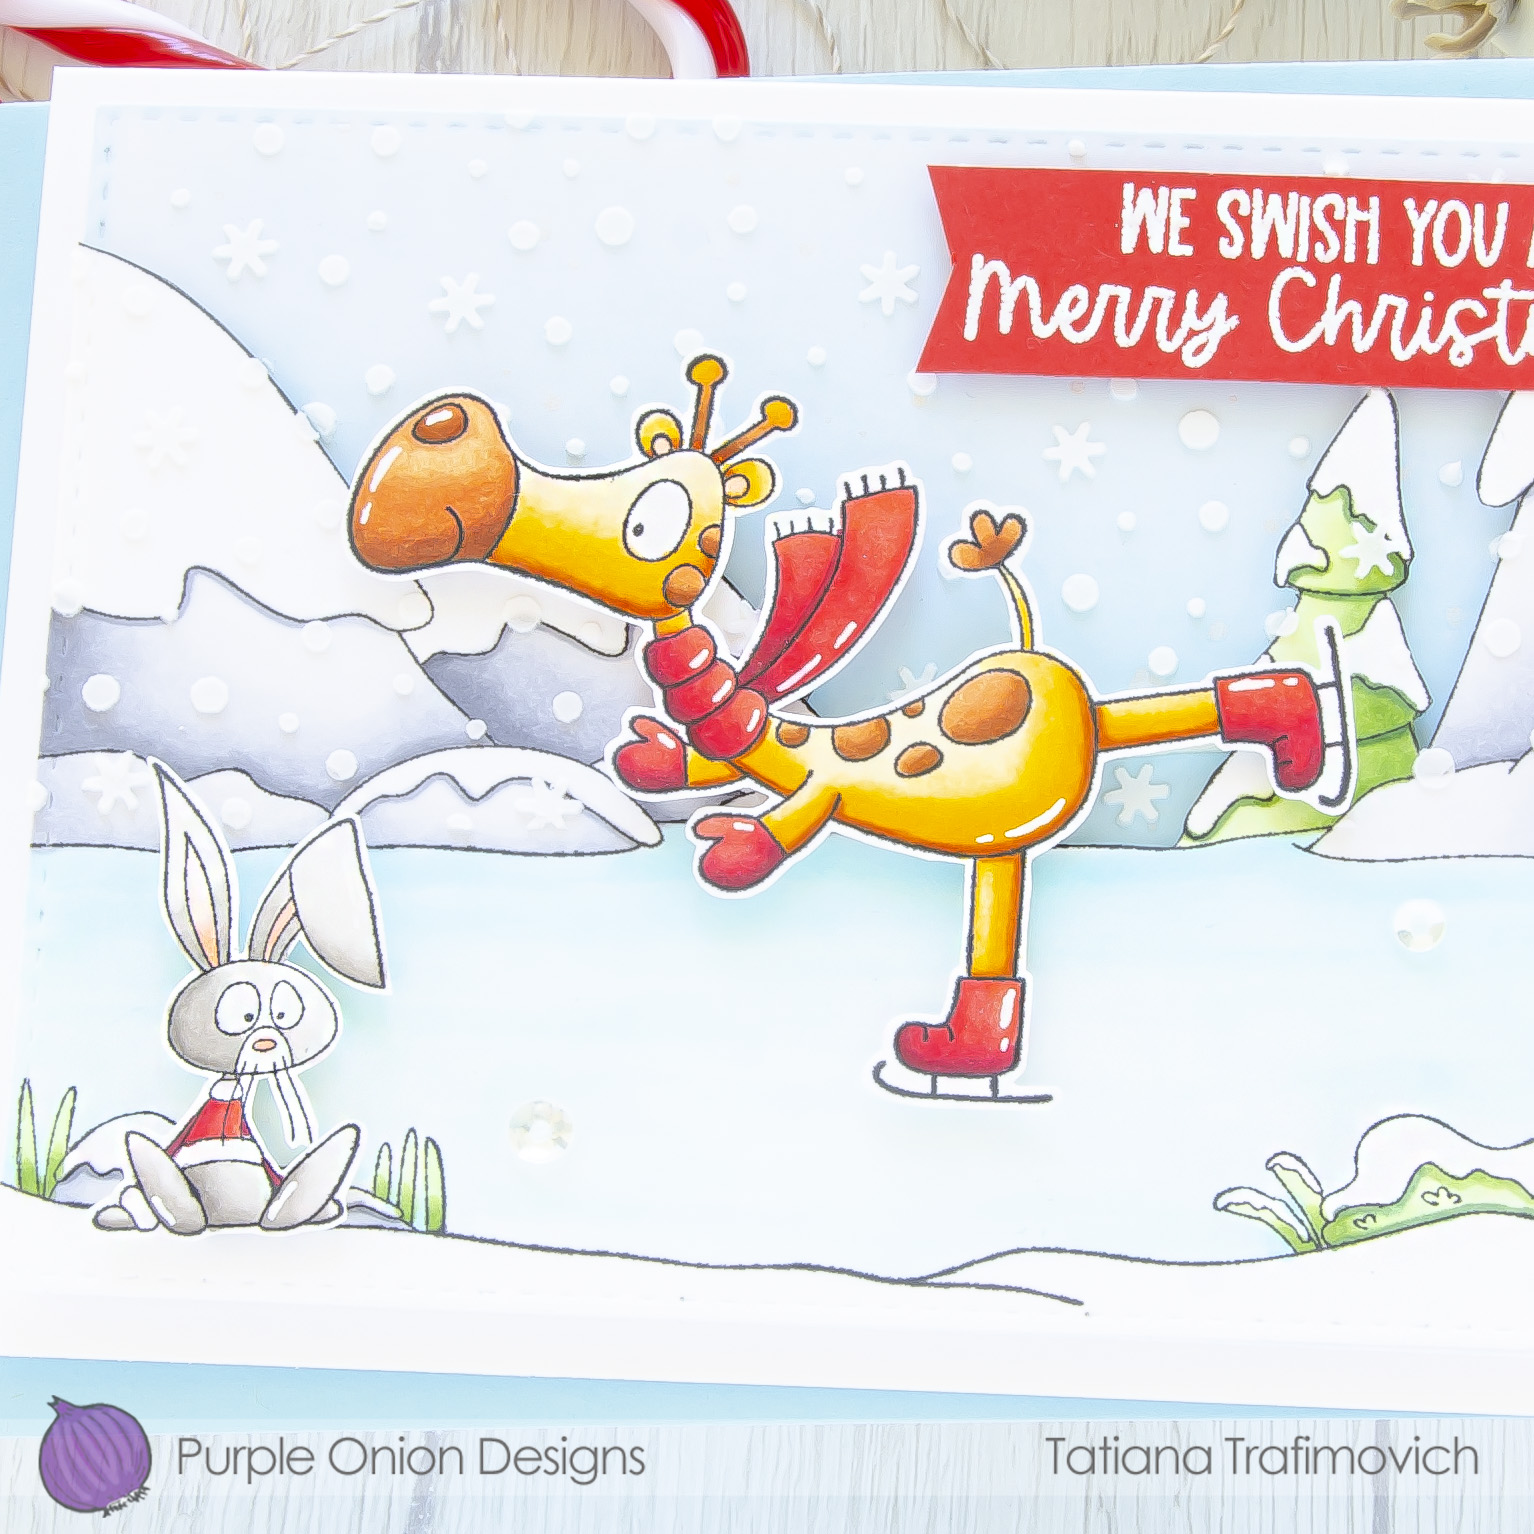 We Swish You A Merry Christmas #handmade card by Tatiana Trafimovich #tatianacraftandart - stamps by Purple Onion Designs